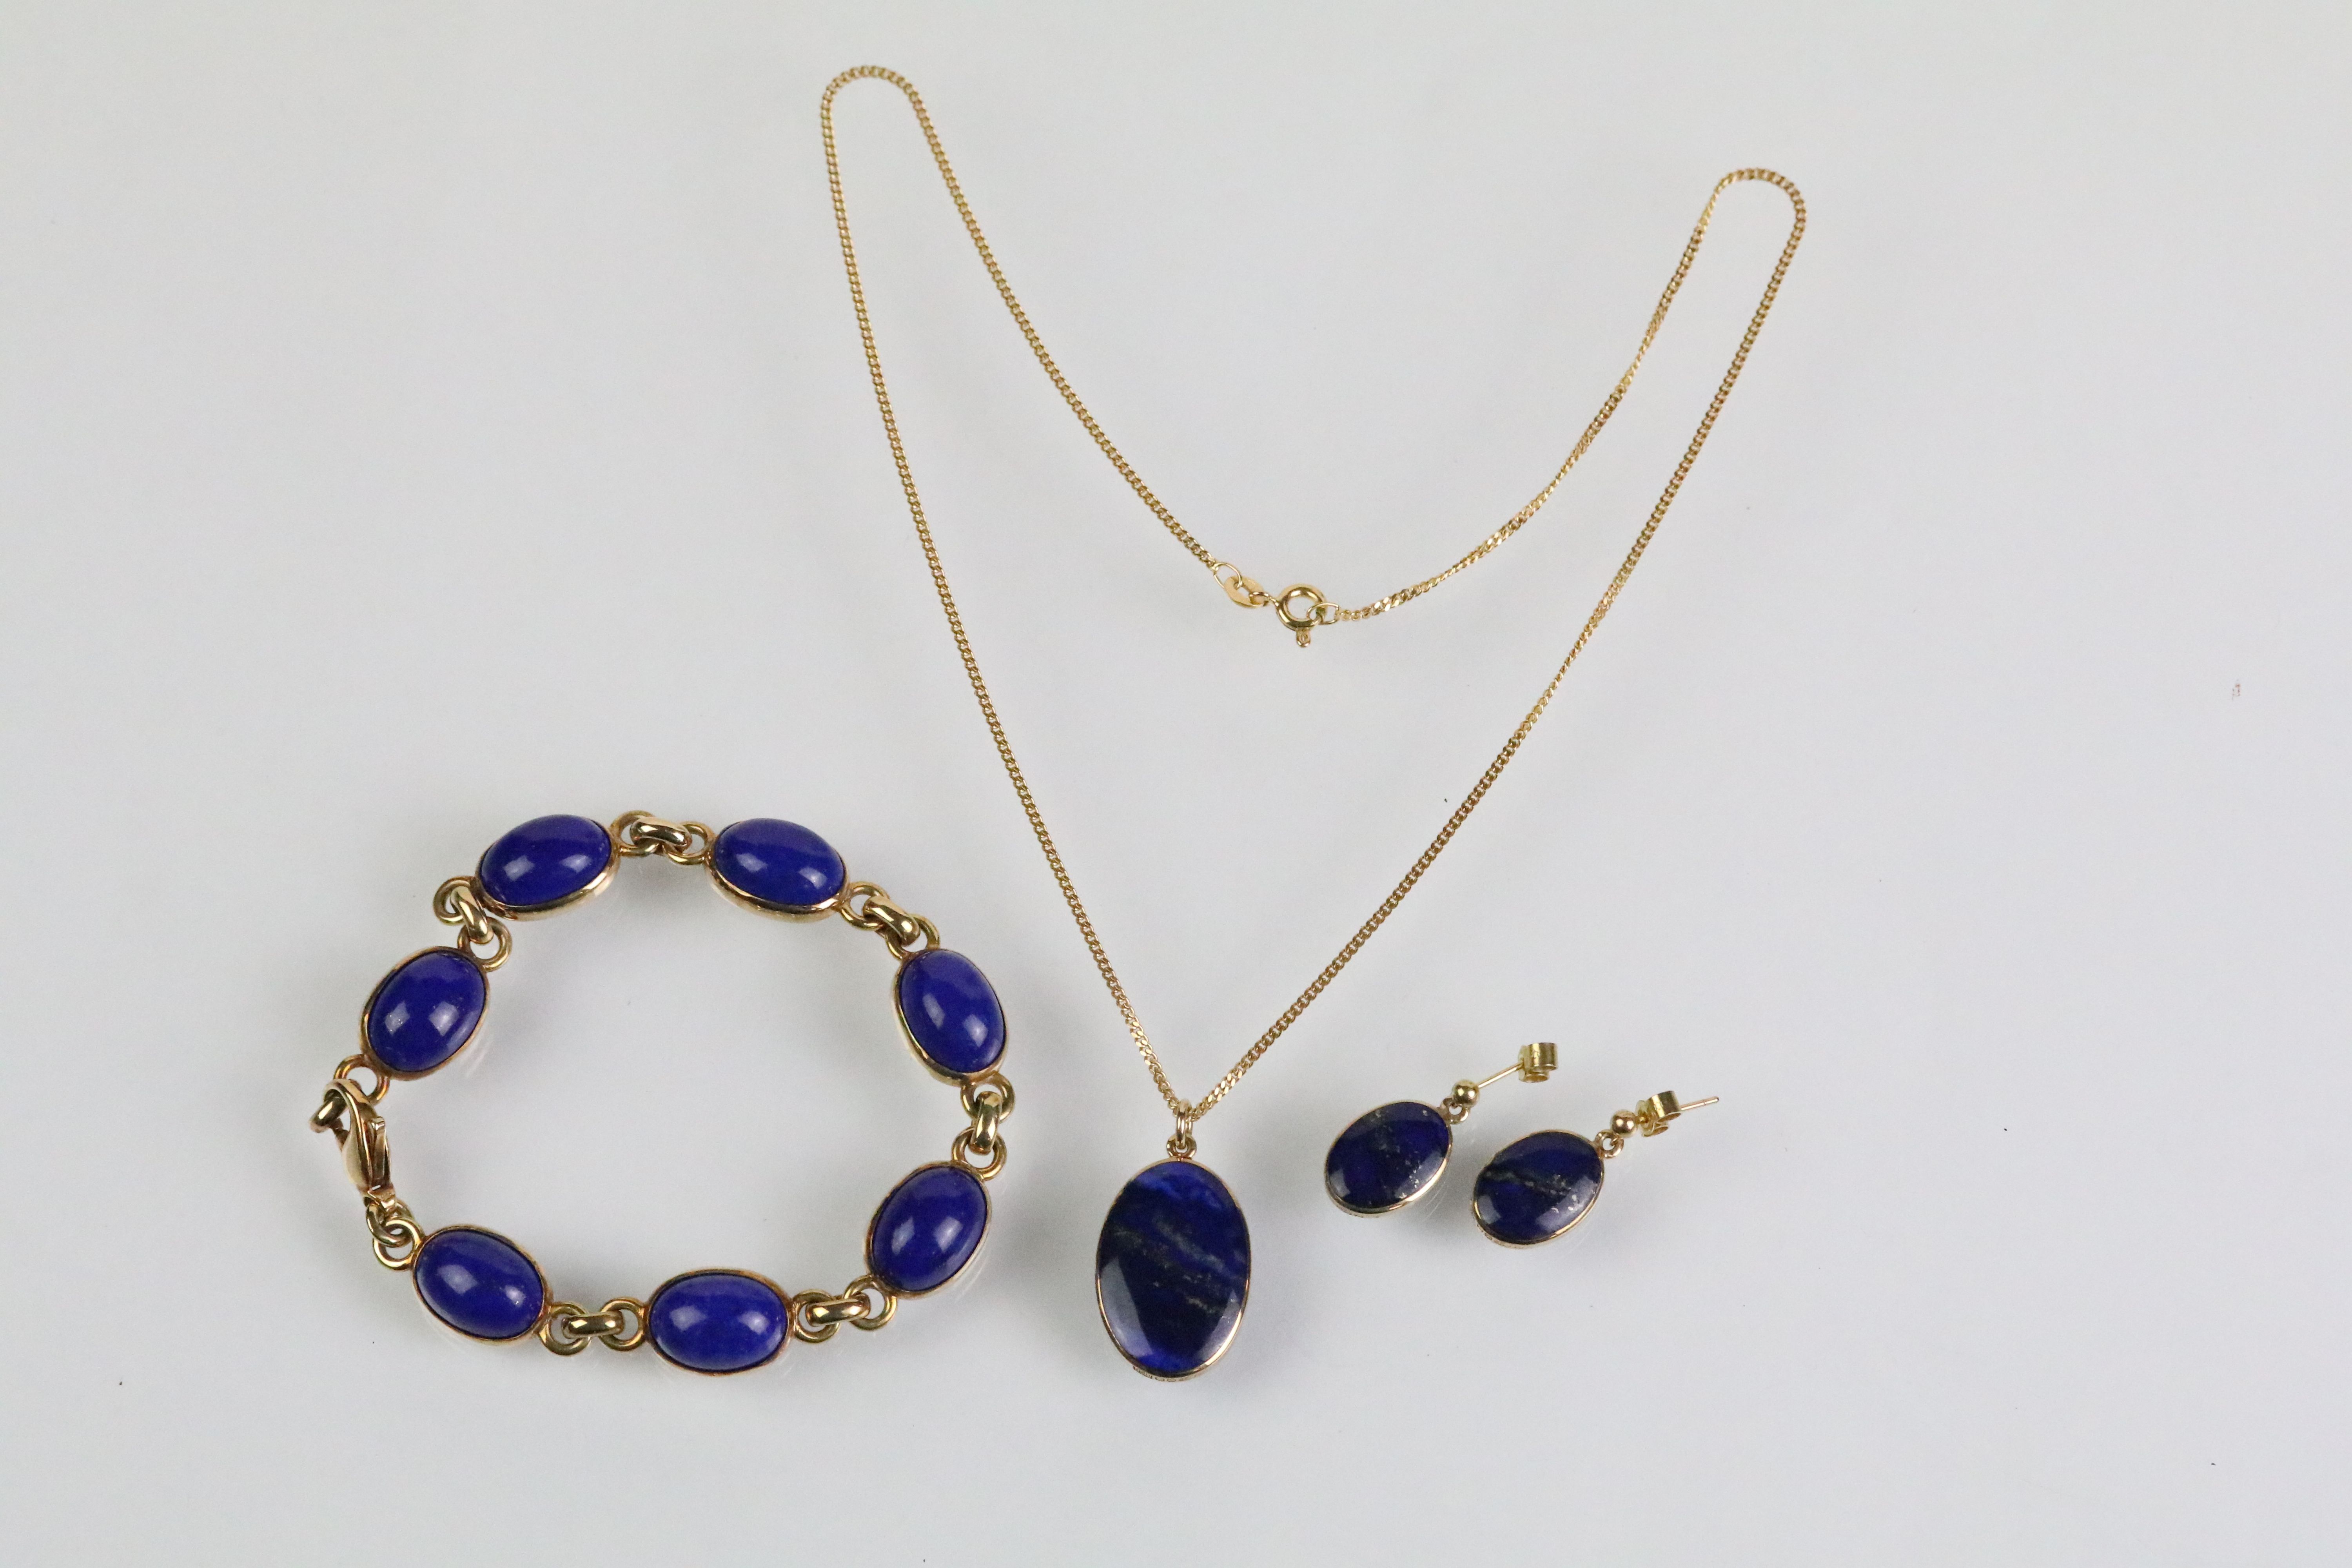 9ct and lapis lazuli necklace, bracelet and earrings. The bracelet set with seven lapis lazuli